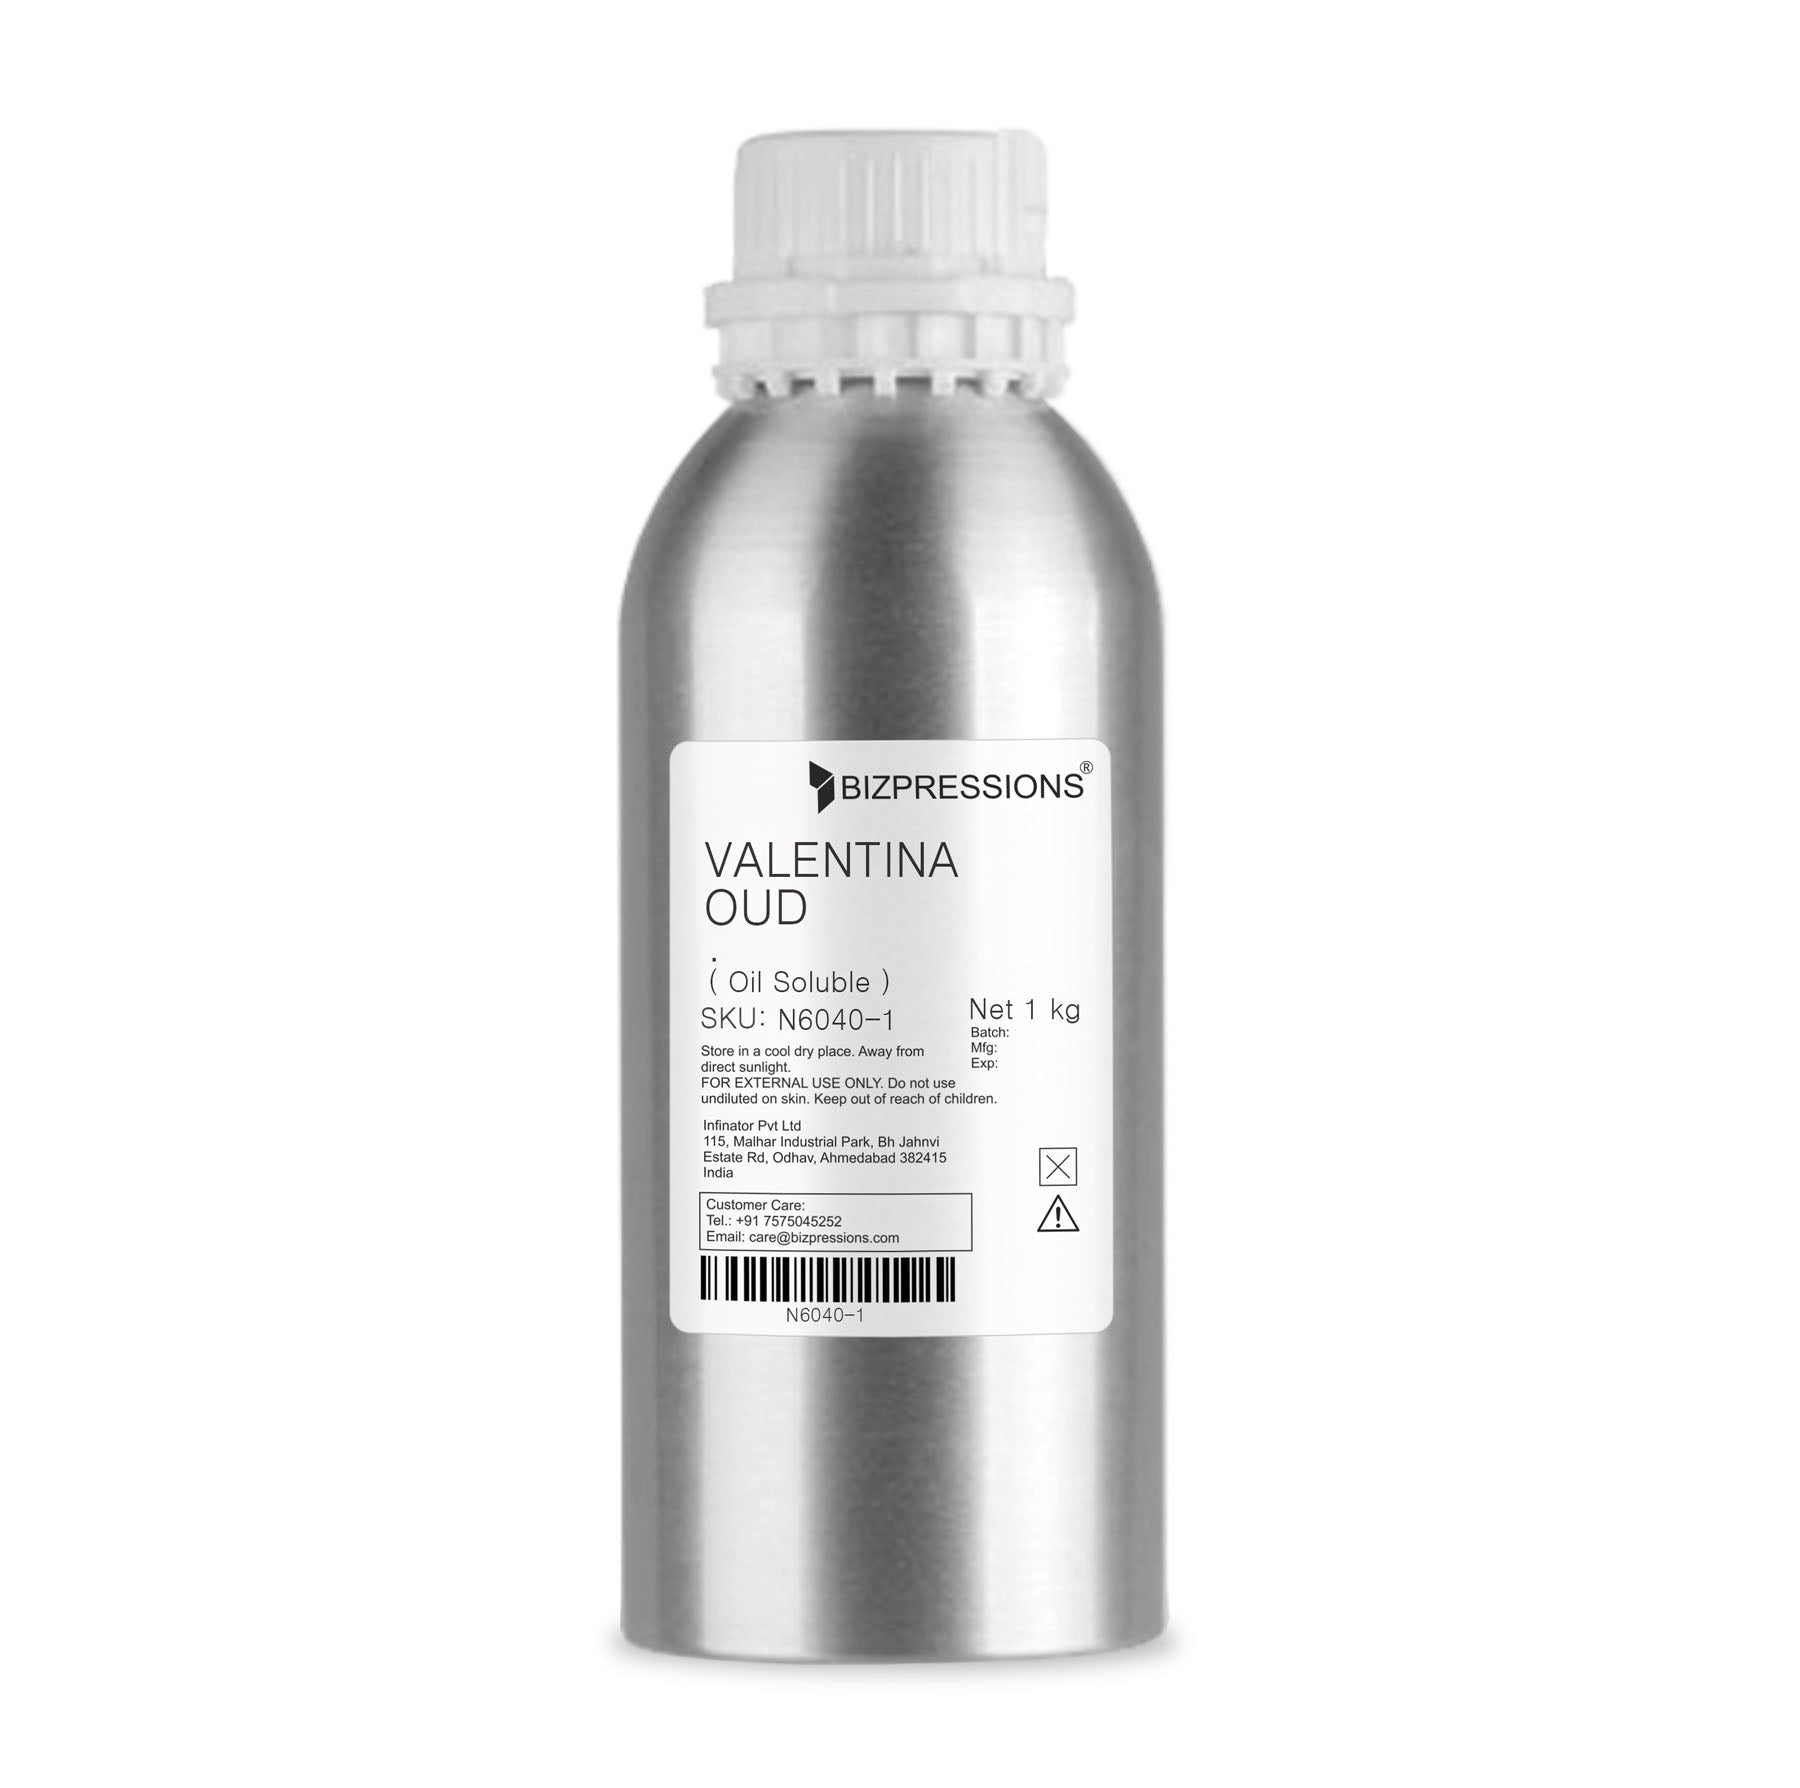 VALENTINA OUD - Fragrance ( Oil Soluble ) - 1 kg